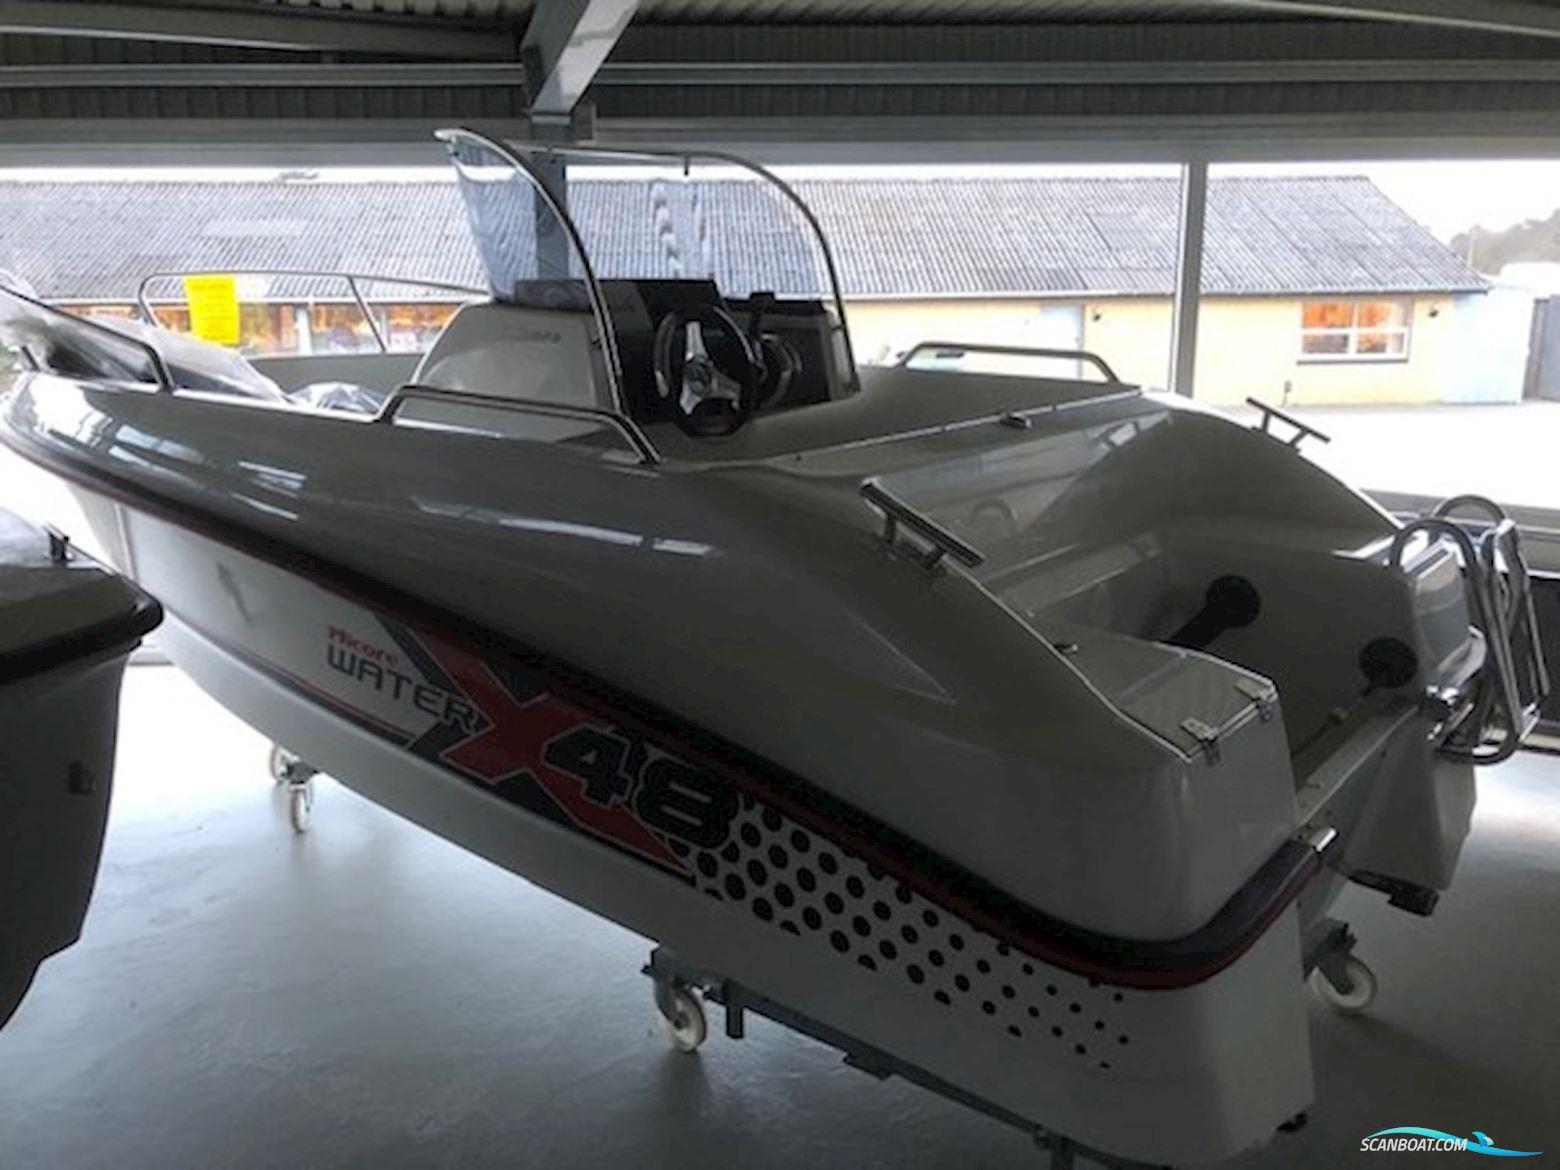 Micore X 48 Med Mercury F60 Efi Elpt - Garmin Navigation/Ekkolod Motor boat 2021, with Mercury engine, Denmark